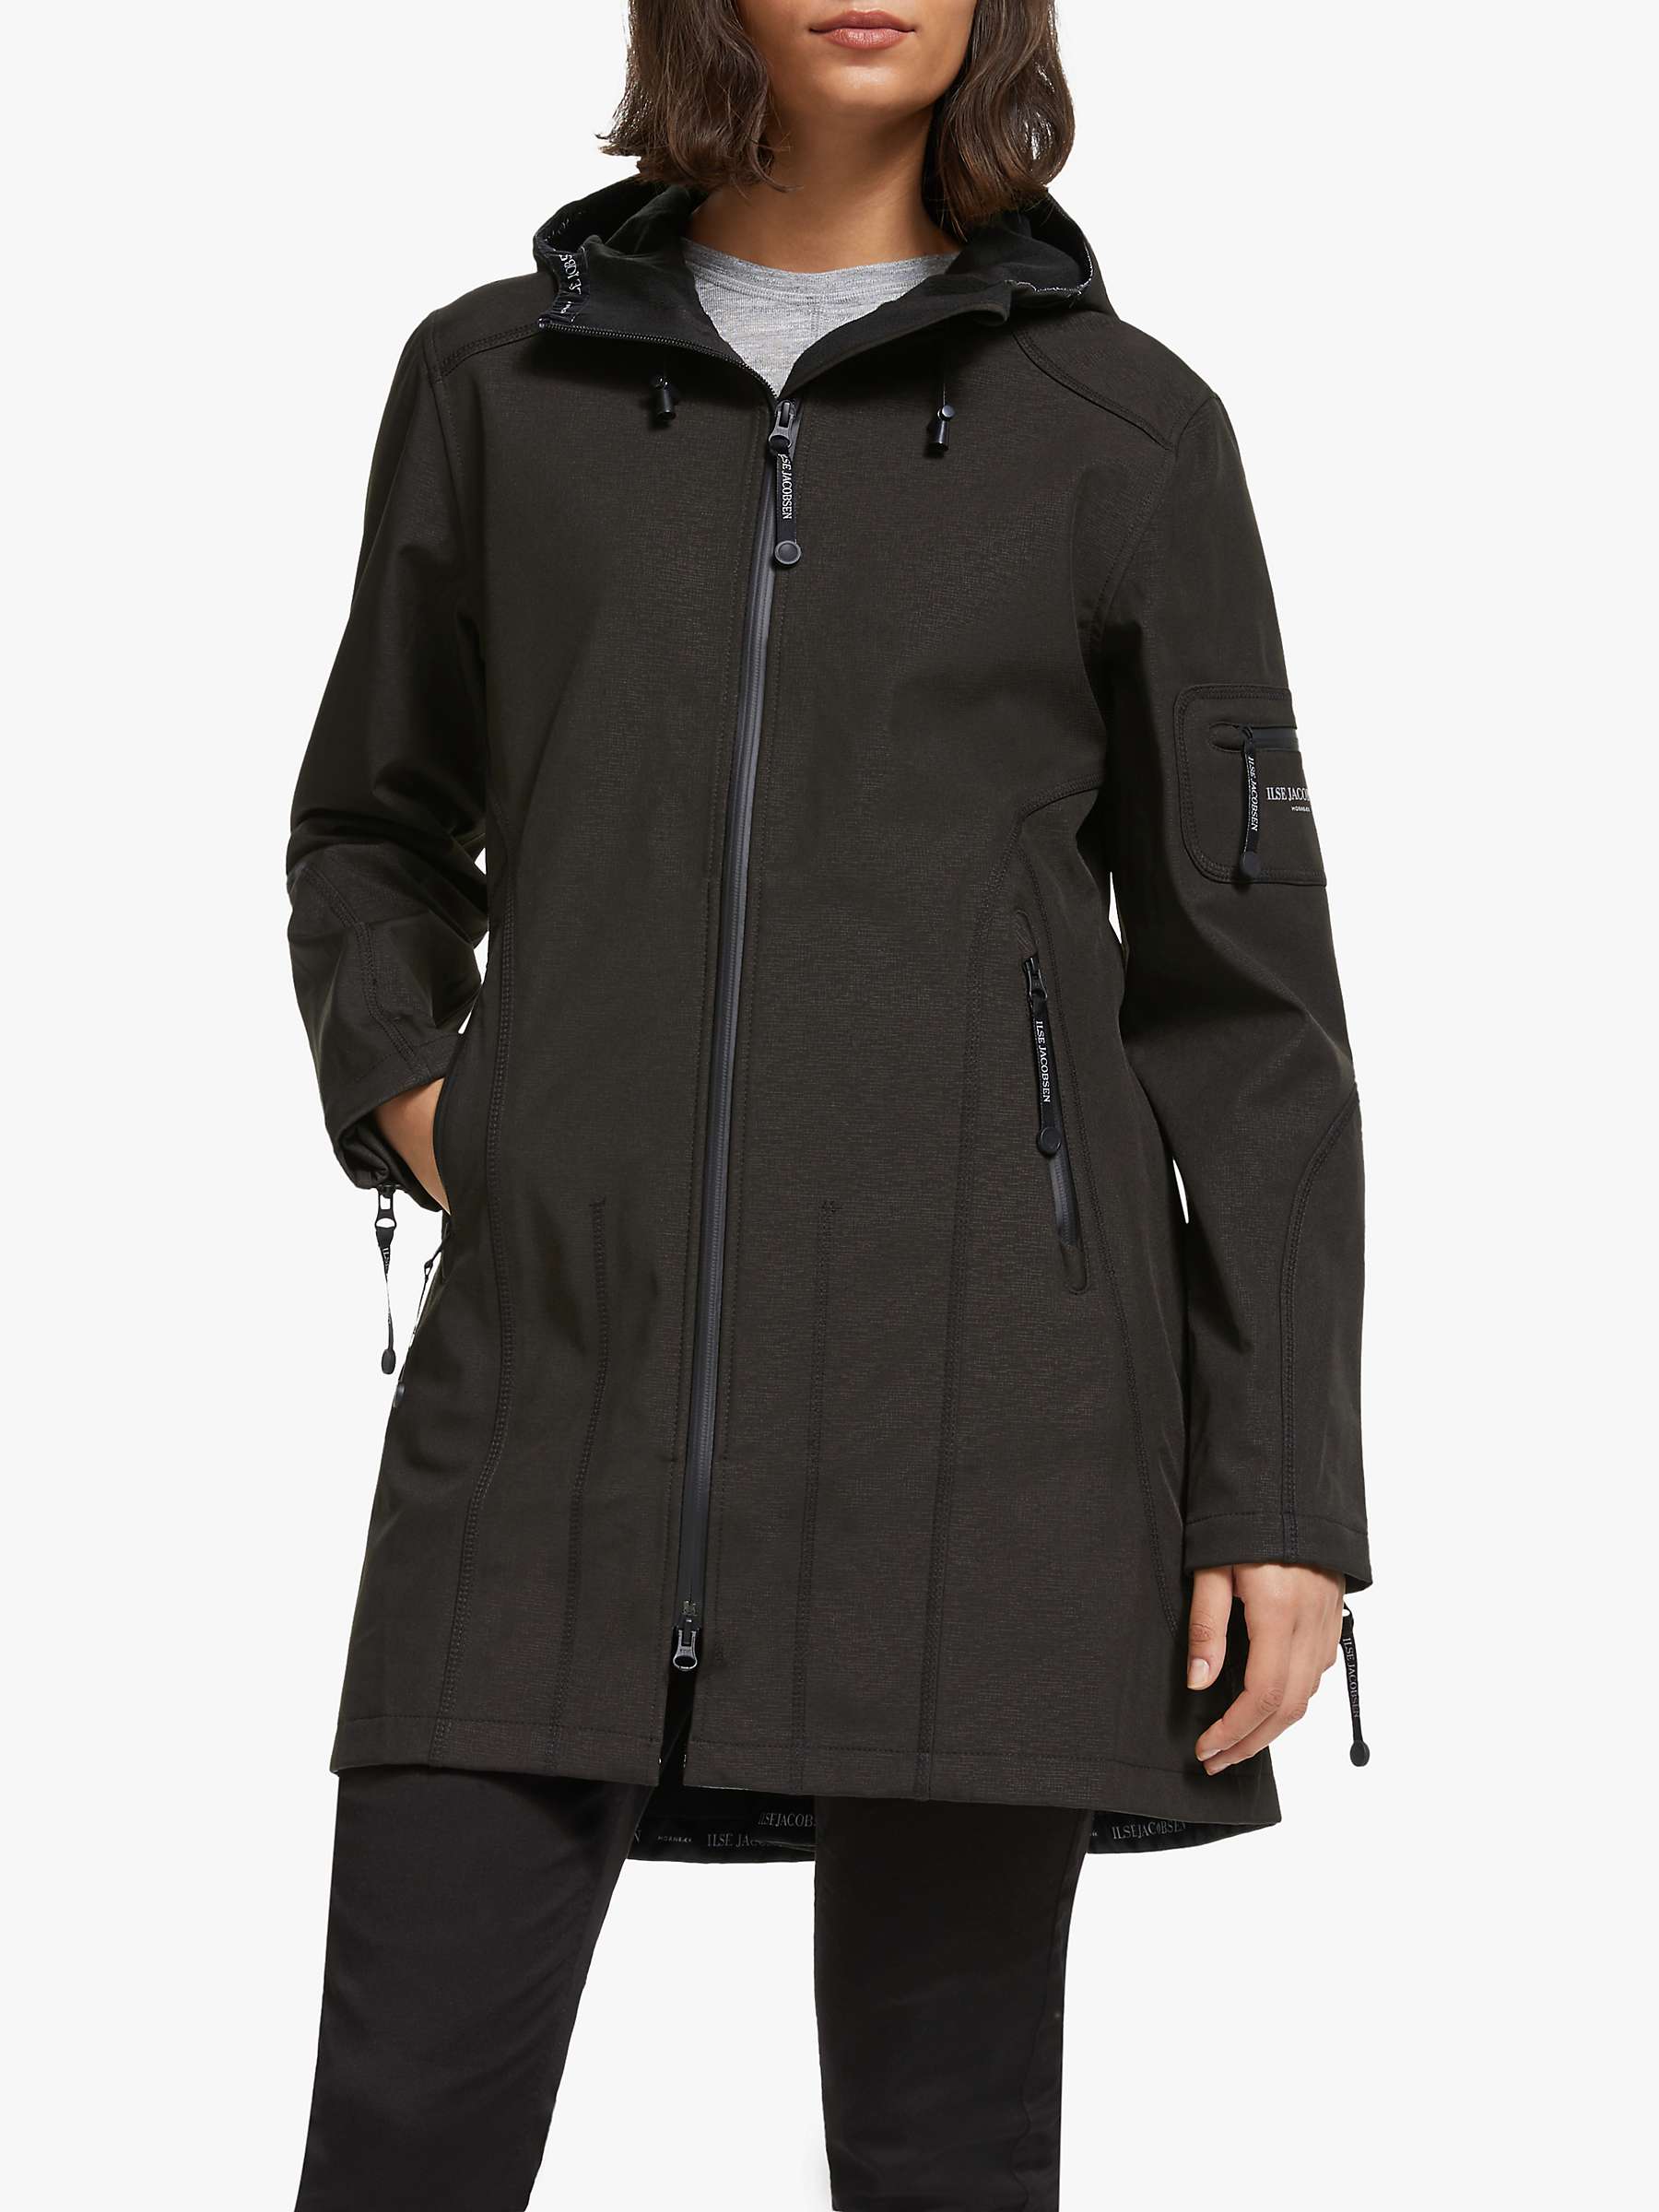 Buy Ilse Jacobsen Hornbæk 3/4 Length Raincoat, Black Online at johnlewis.com